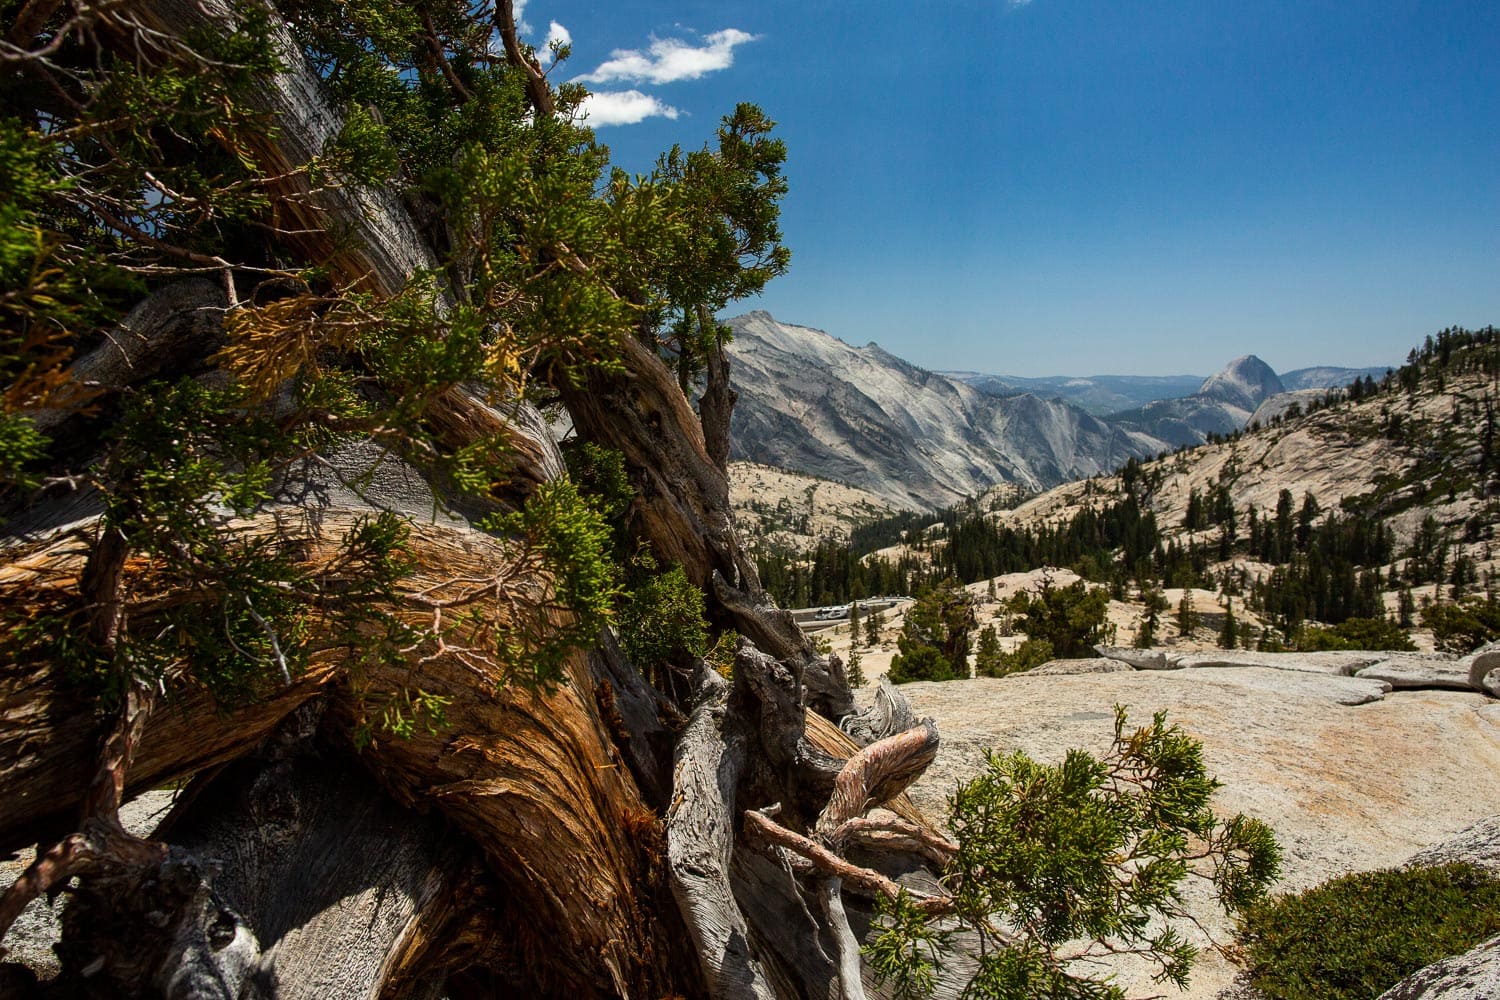 Yosemite's tioga road offers scenic vistas for elopement photographers.